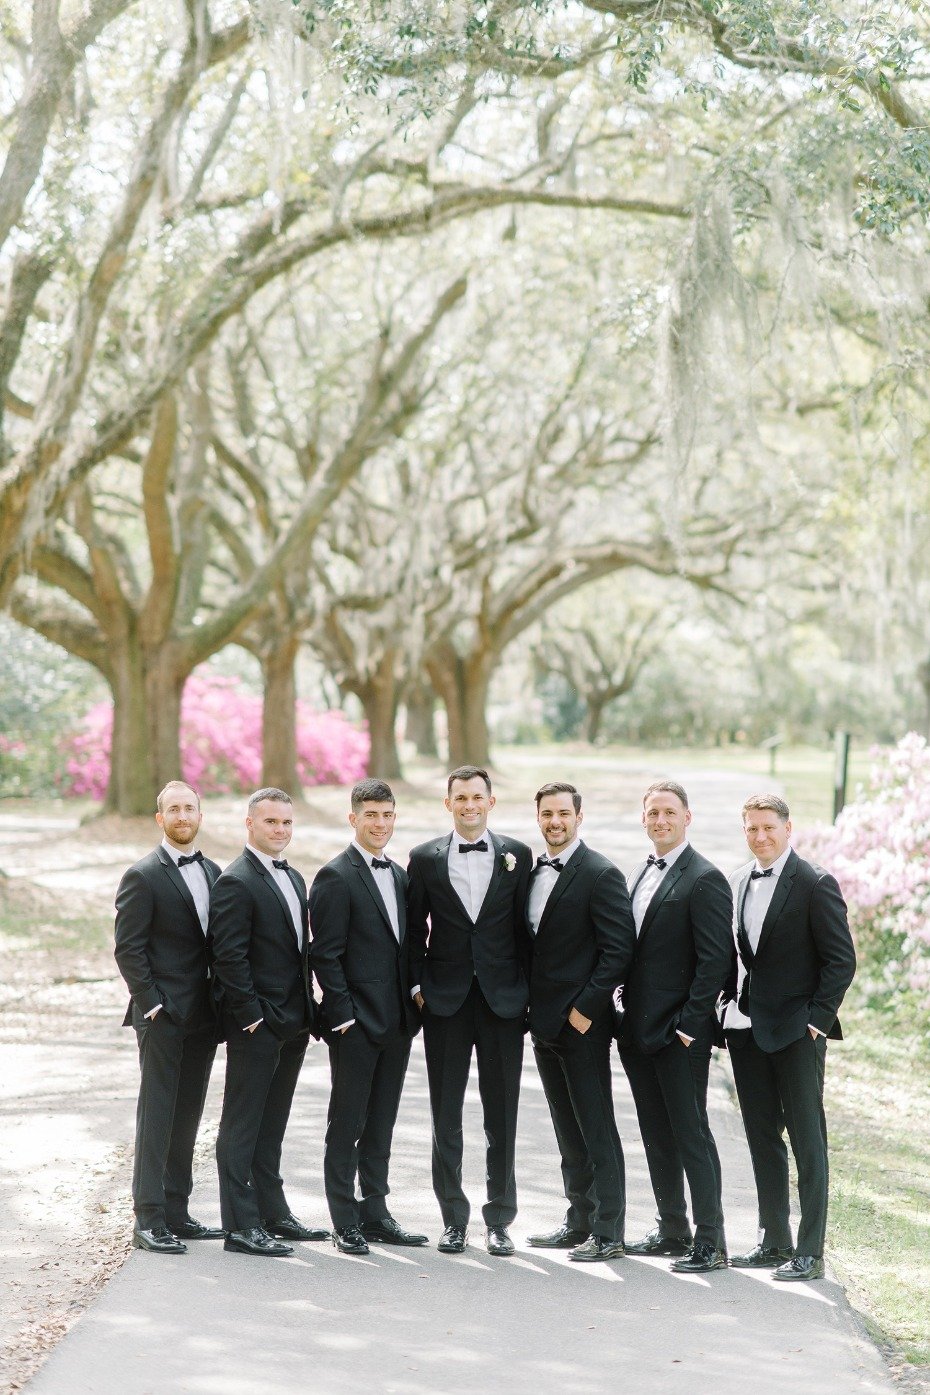 groomsmen in tuxedos